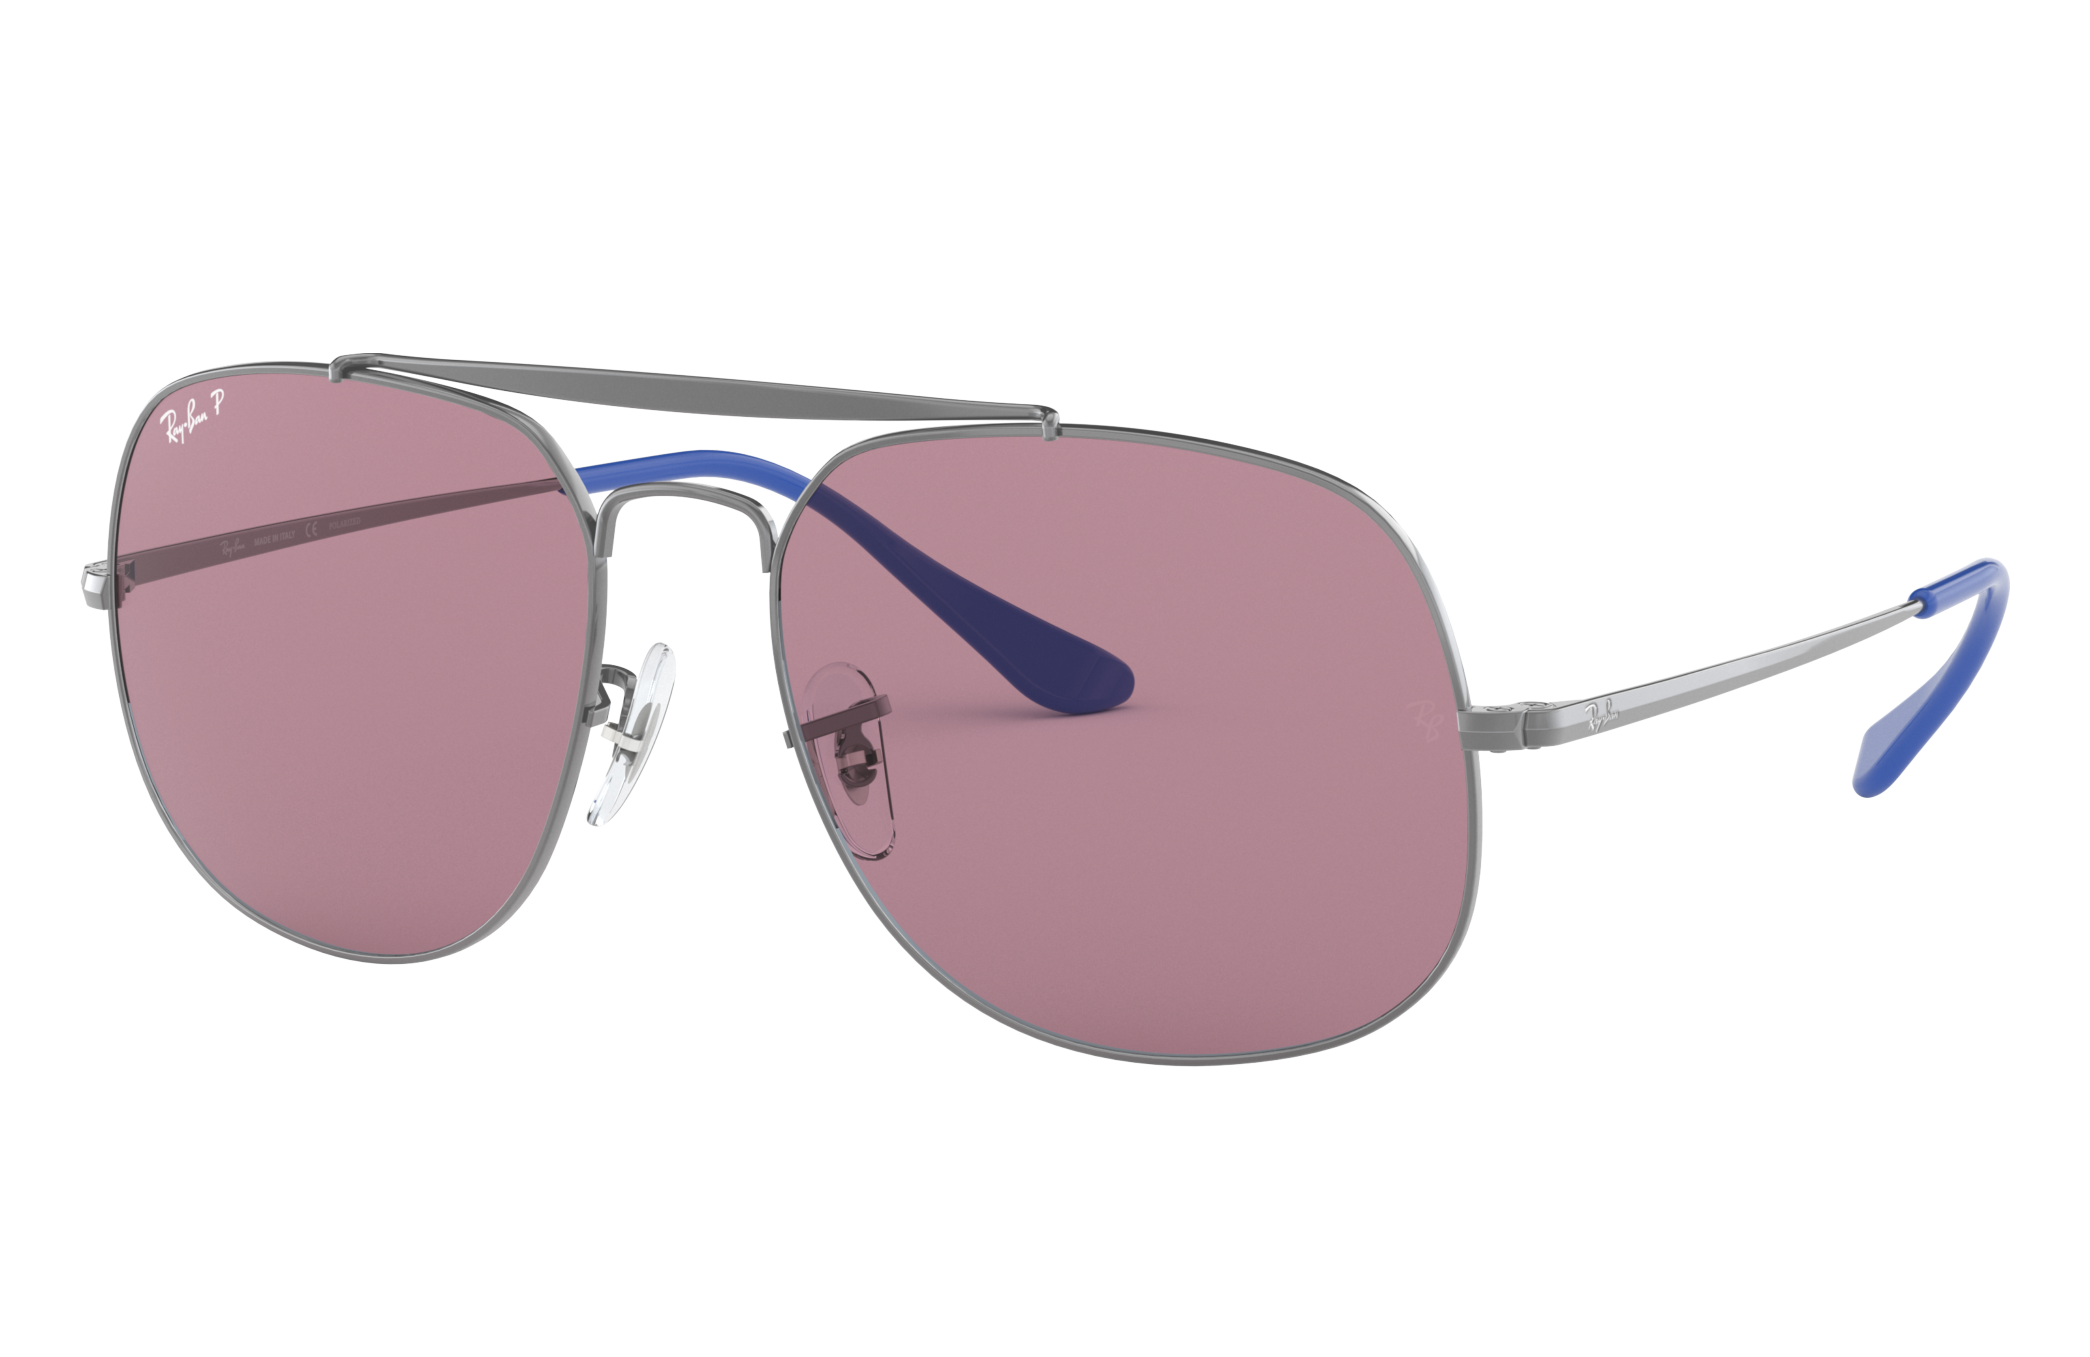 General Pop Sunglasses in Gunmetal and Purple | Ray-Ban®